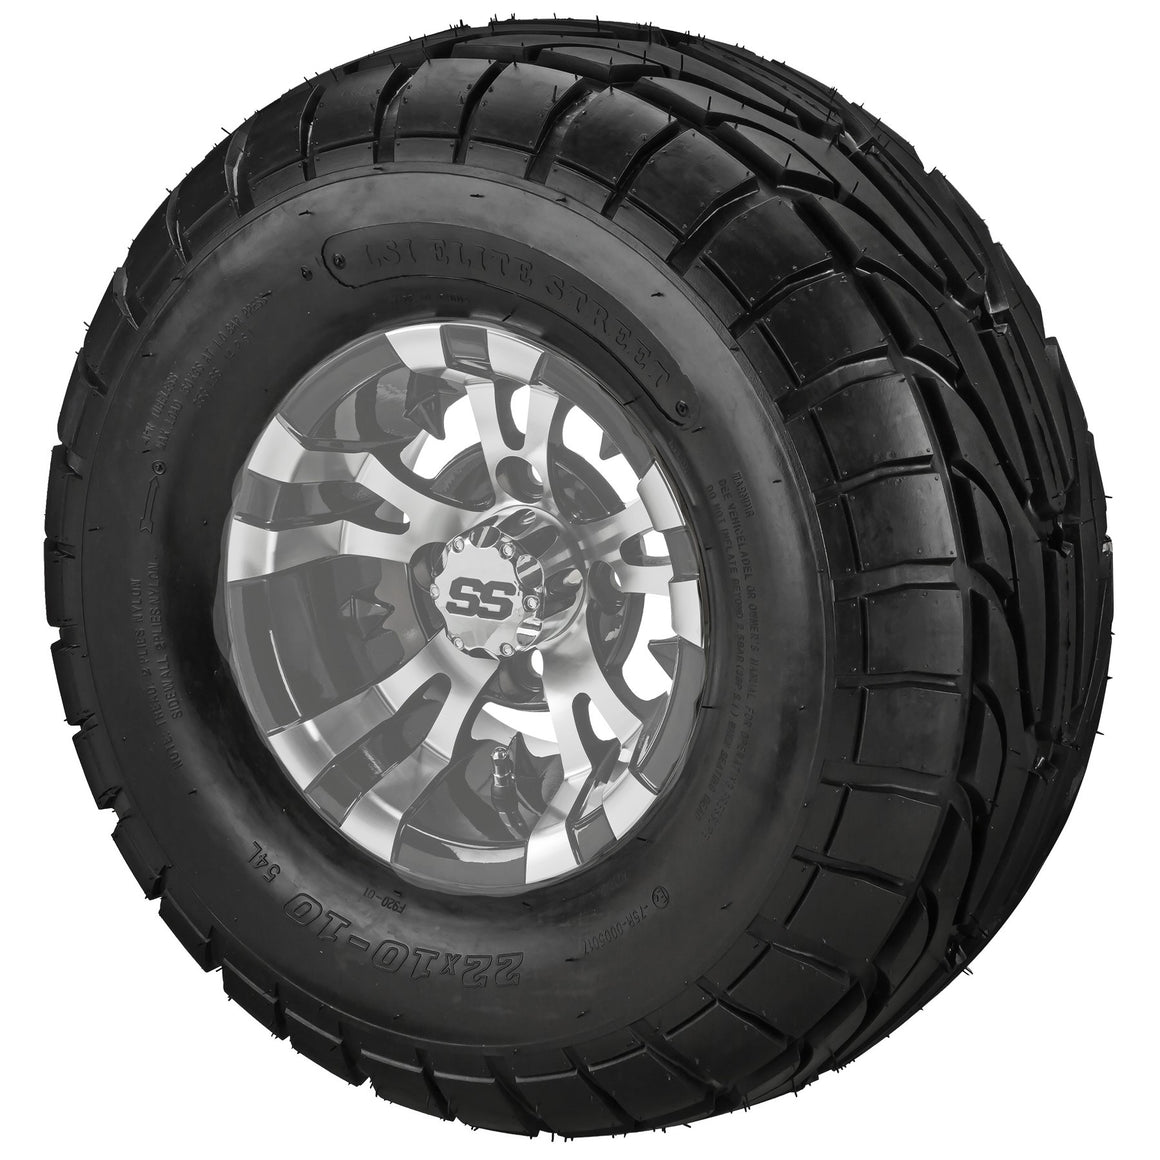 10" Warlock Wheels on 22x10.00-10 LSI Elite A/T Tires Combo